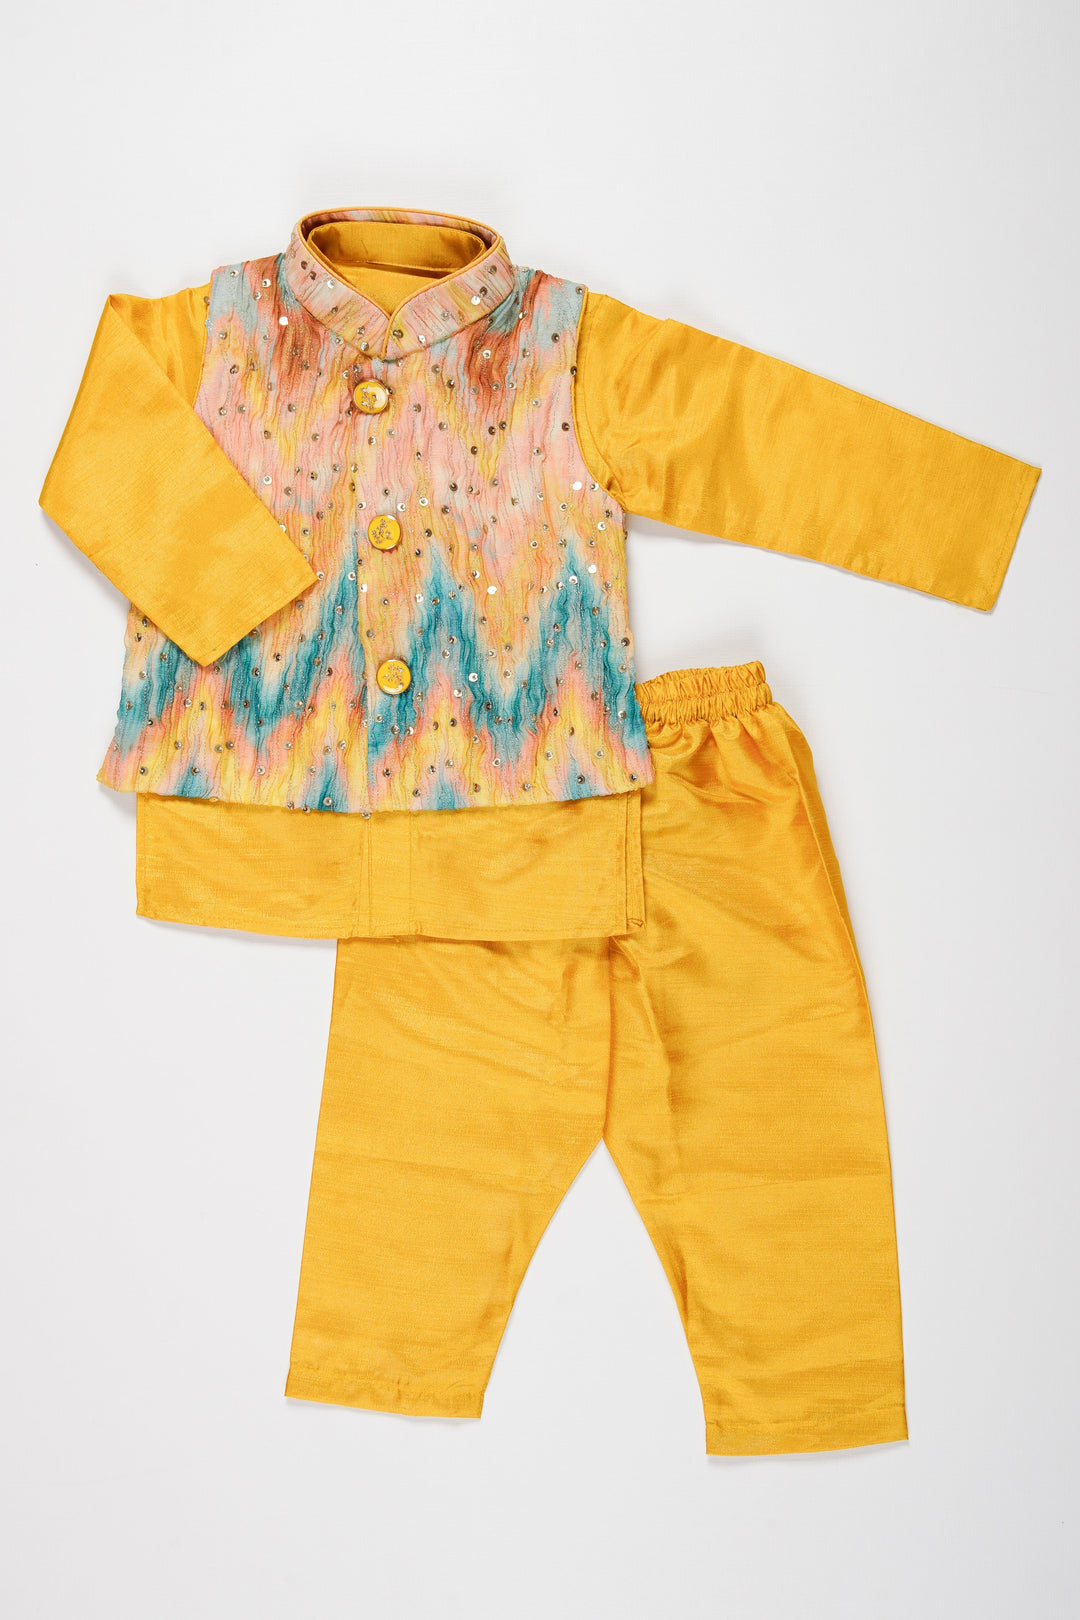 The Nesavu Boys Jacket Sets Boys Sunshine Yellow Kurta Pajama with Vibrant Jacket Set Nesavu Boys Yellow Kurta Pajama with Sequined Jacket | Festive Wear for Kids | The Nesavu